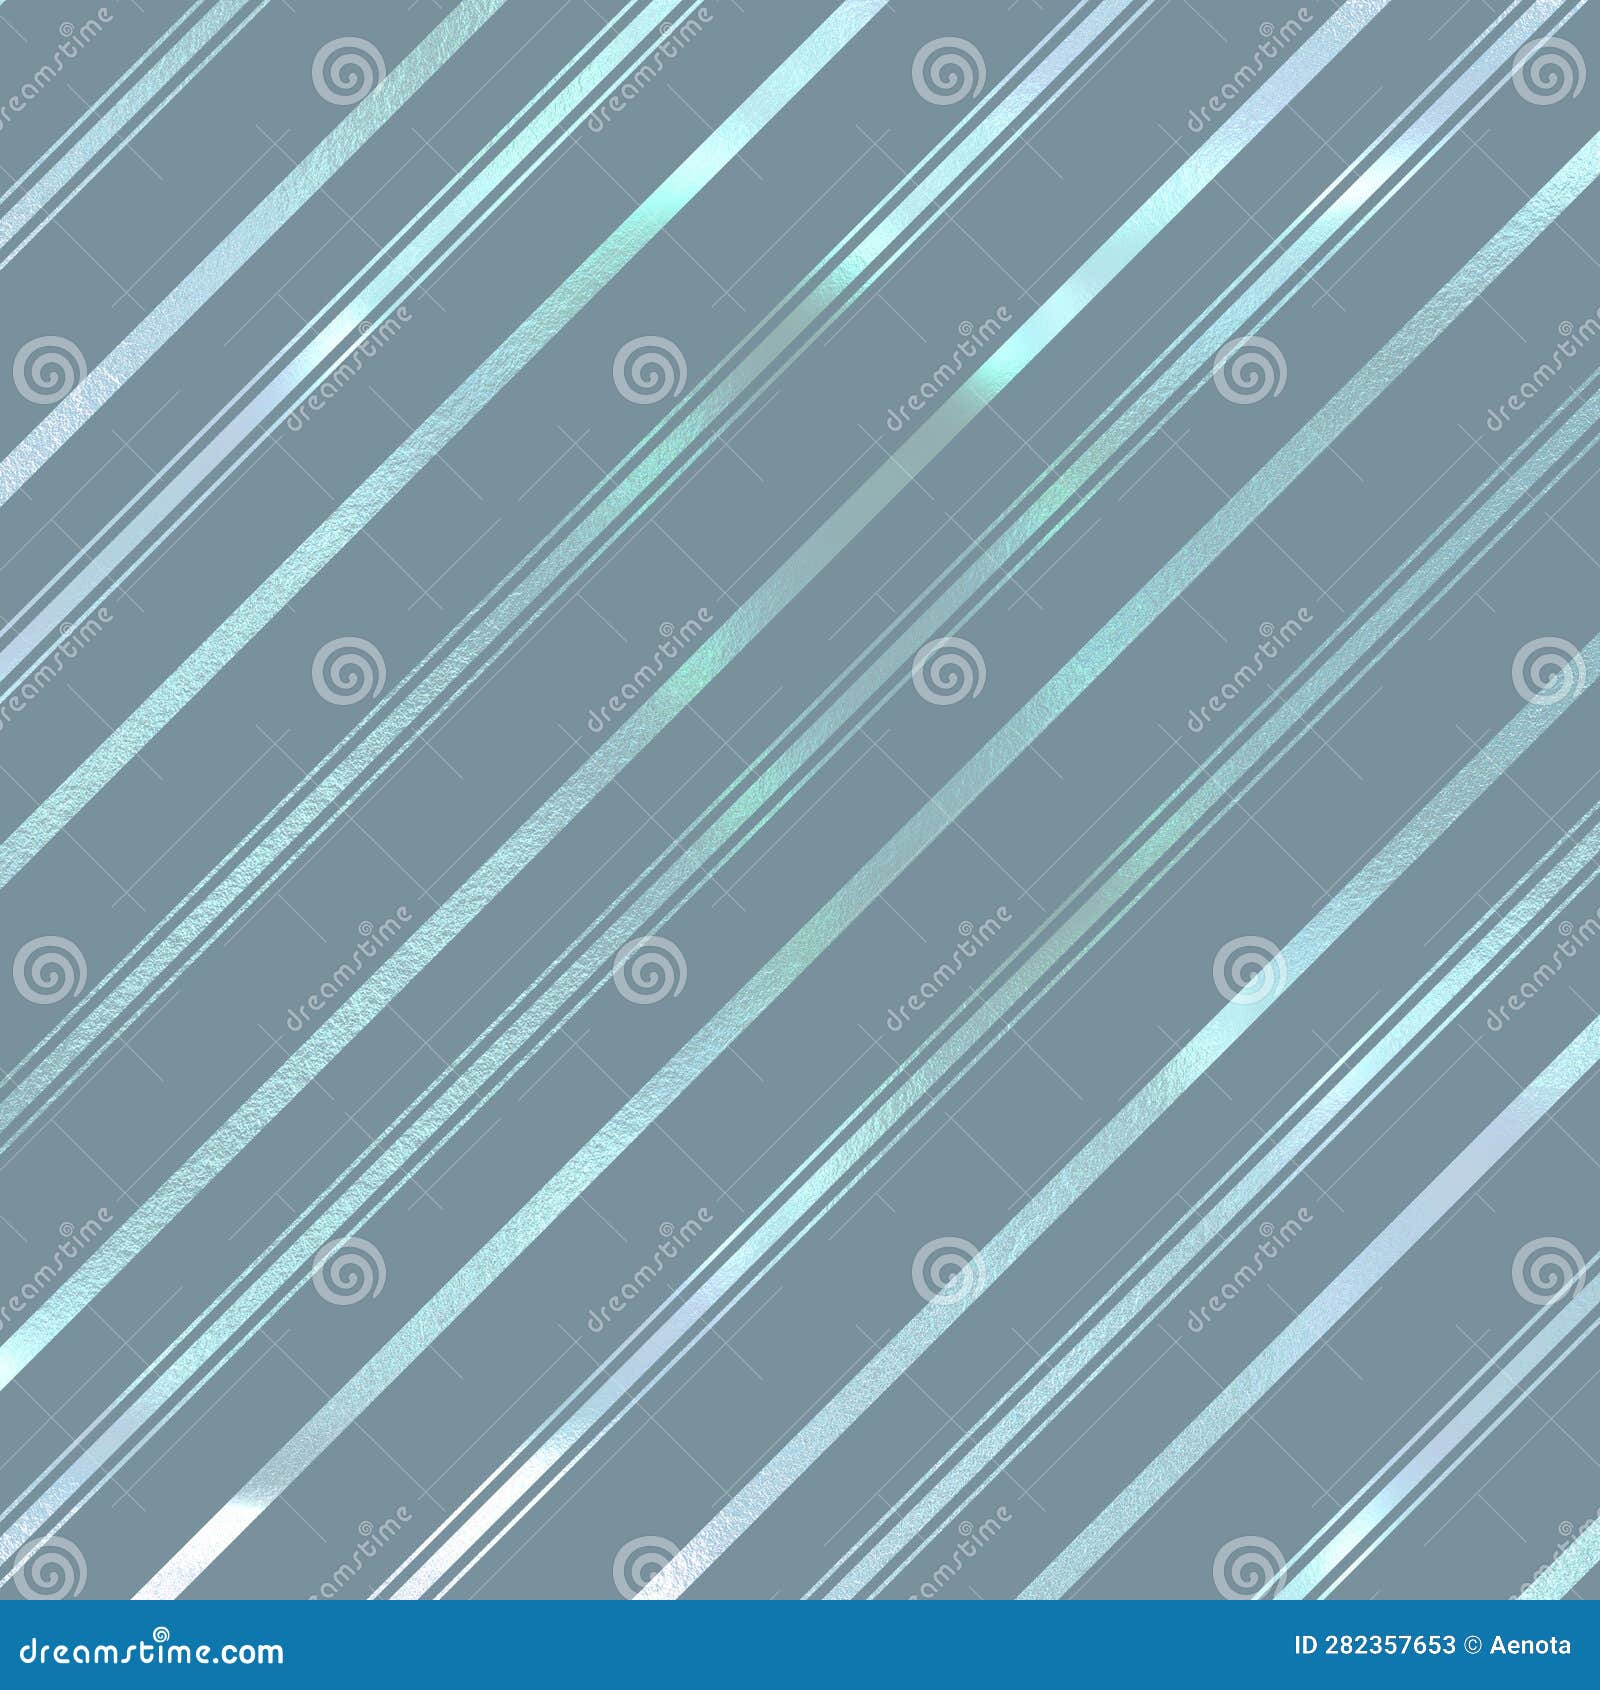 great metalline elegance pattern backdrop - light blue diagonal stripe background - powder blue stylishness texture